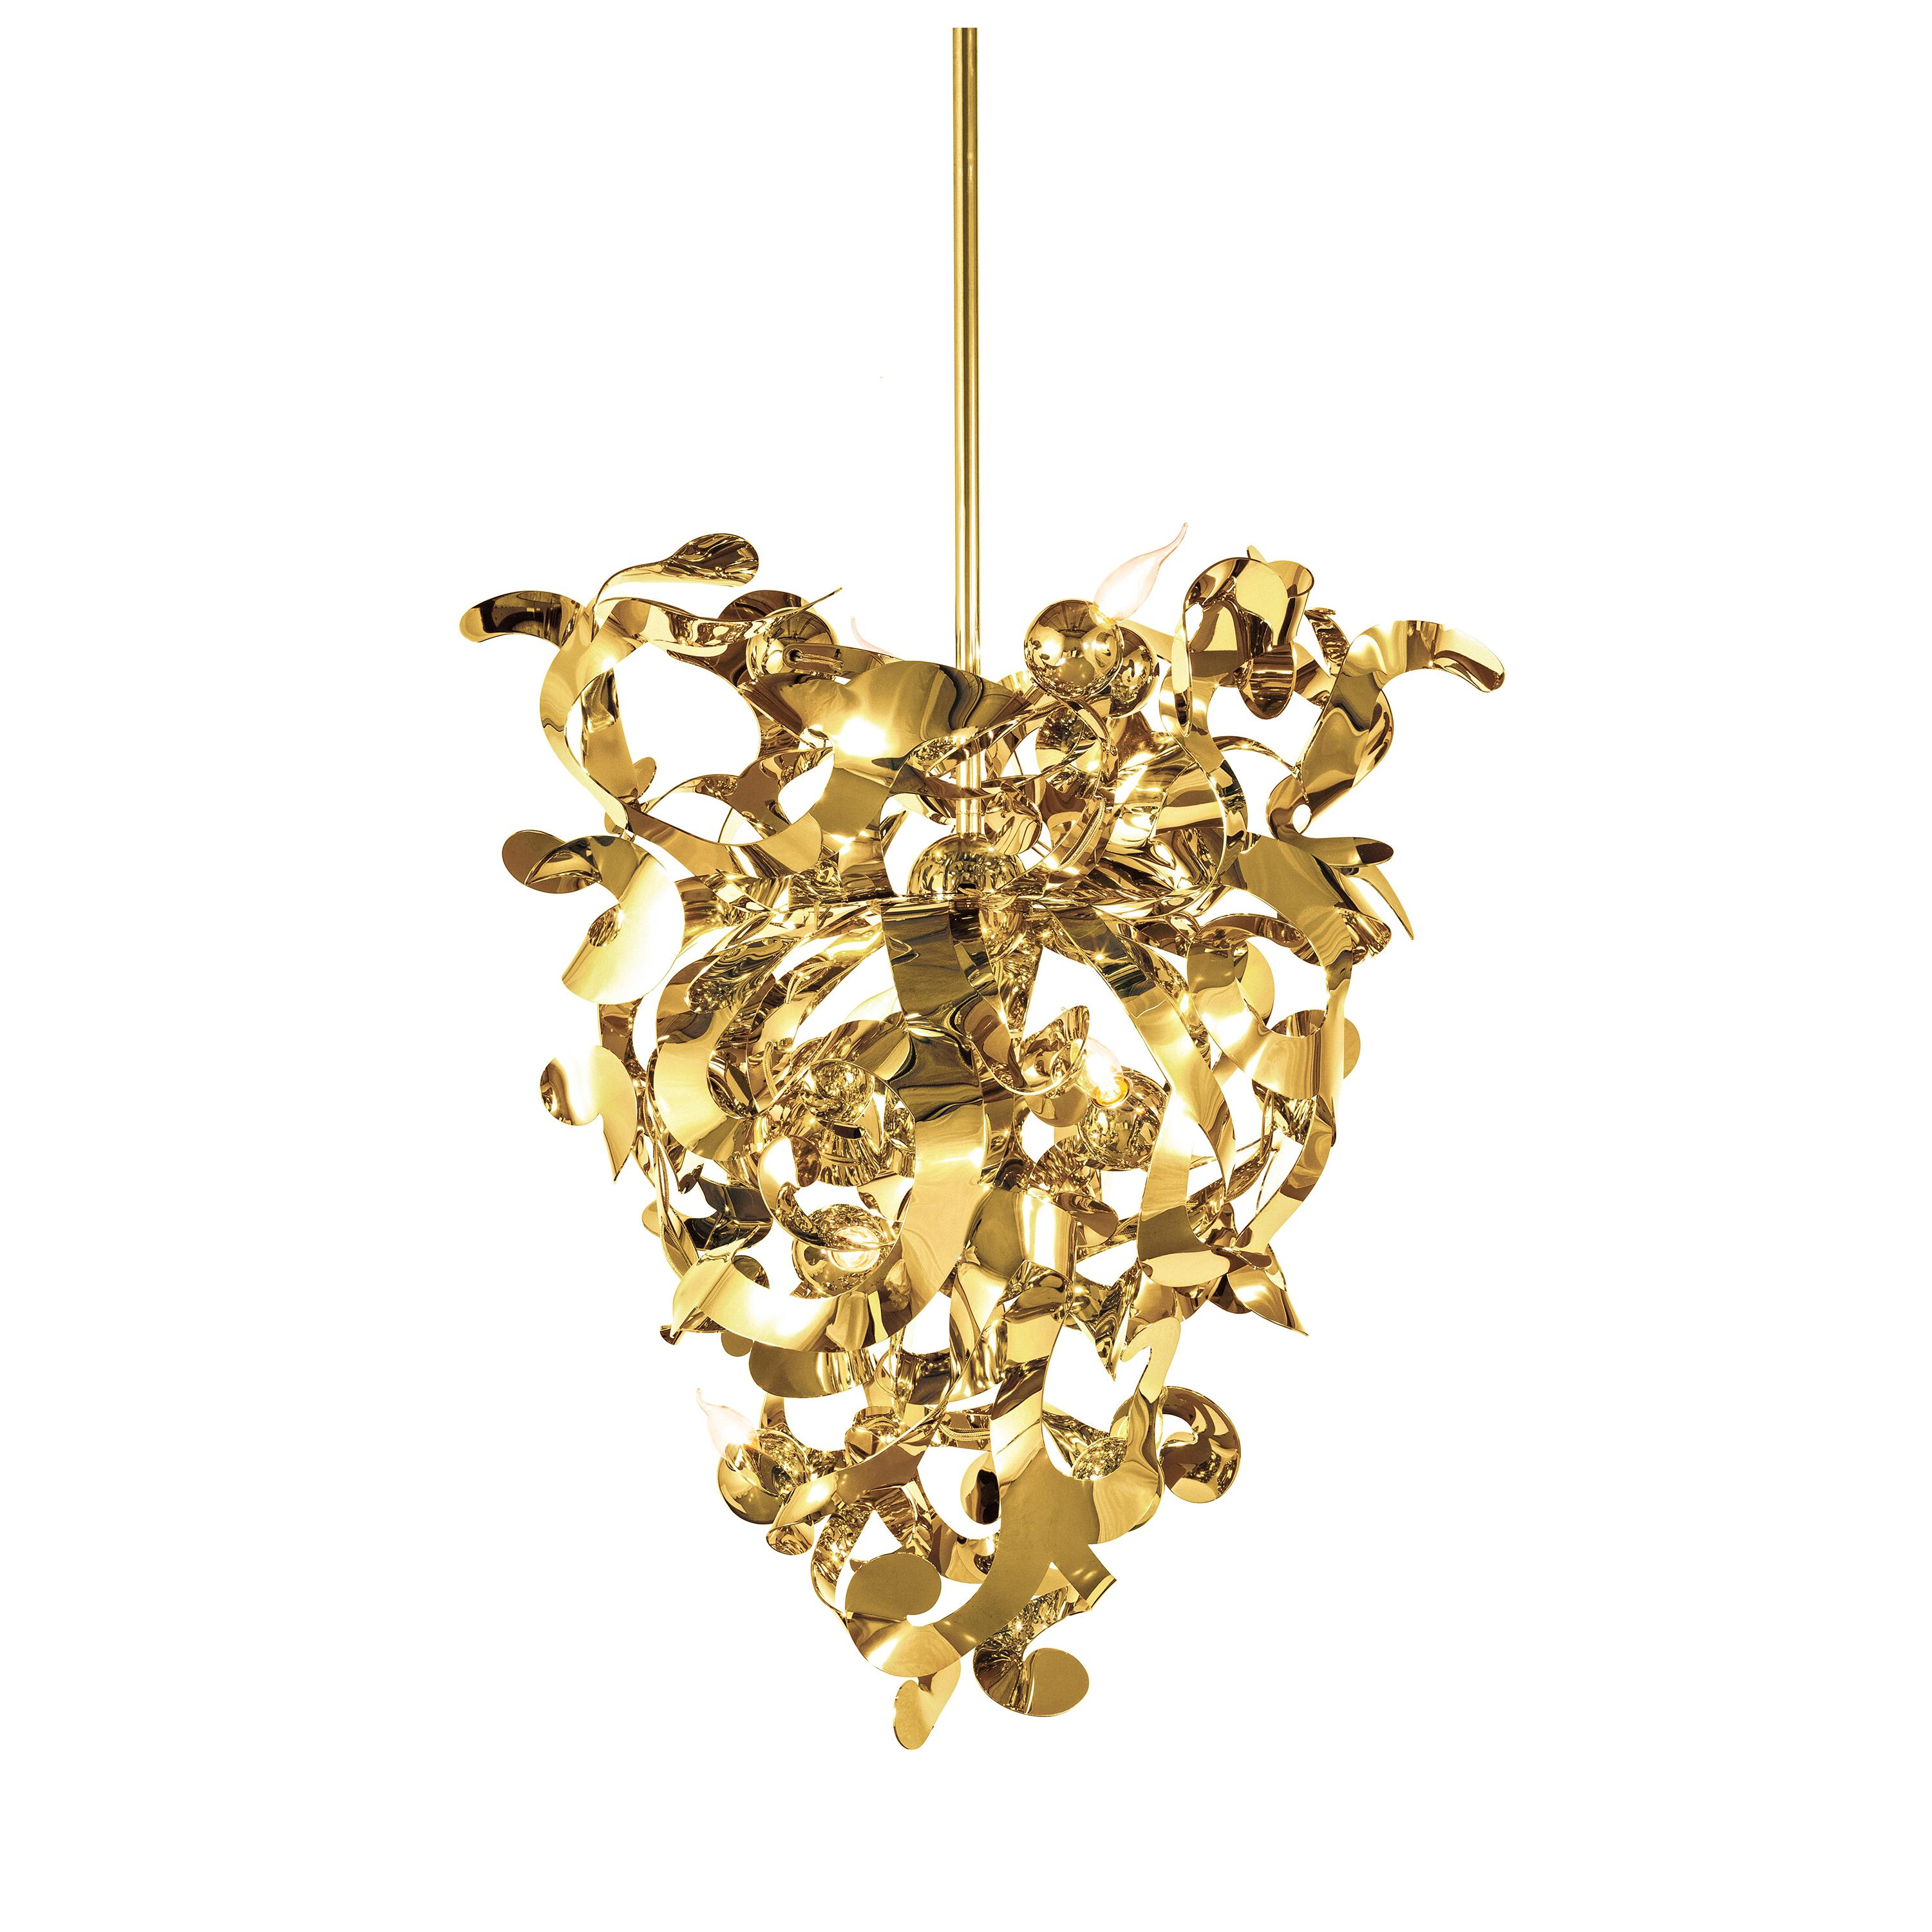 Modern Chandelier in a Brass Finish, Kelp Collection, by Brand van Egmond For Sale